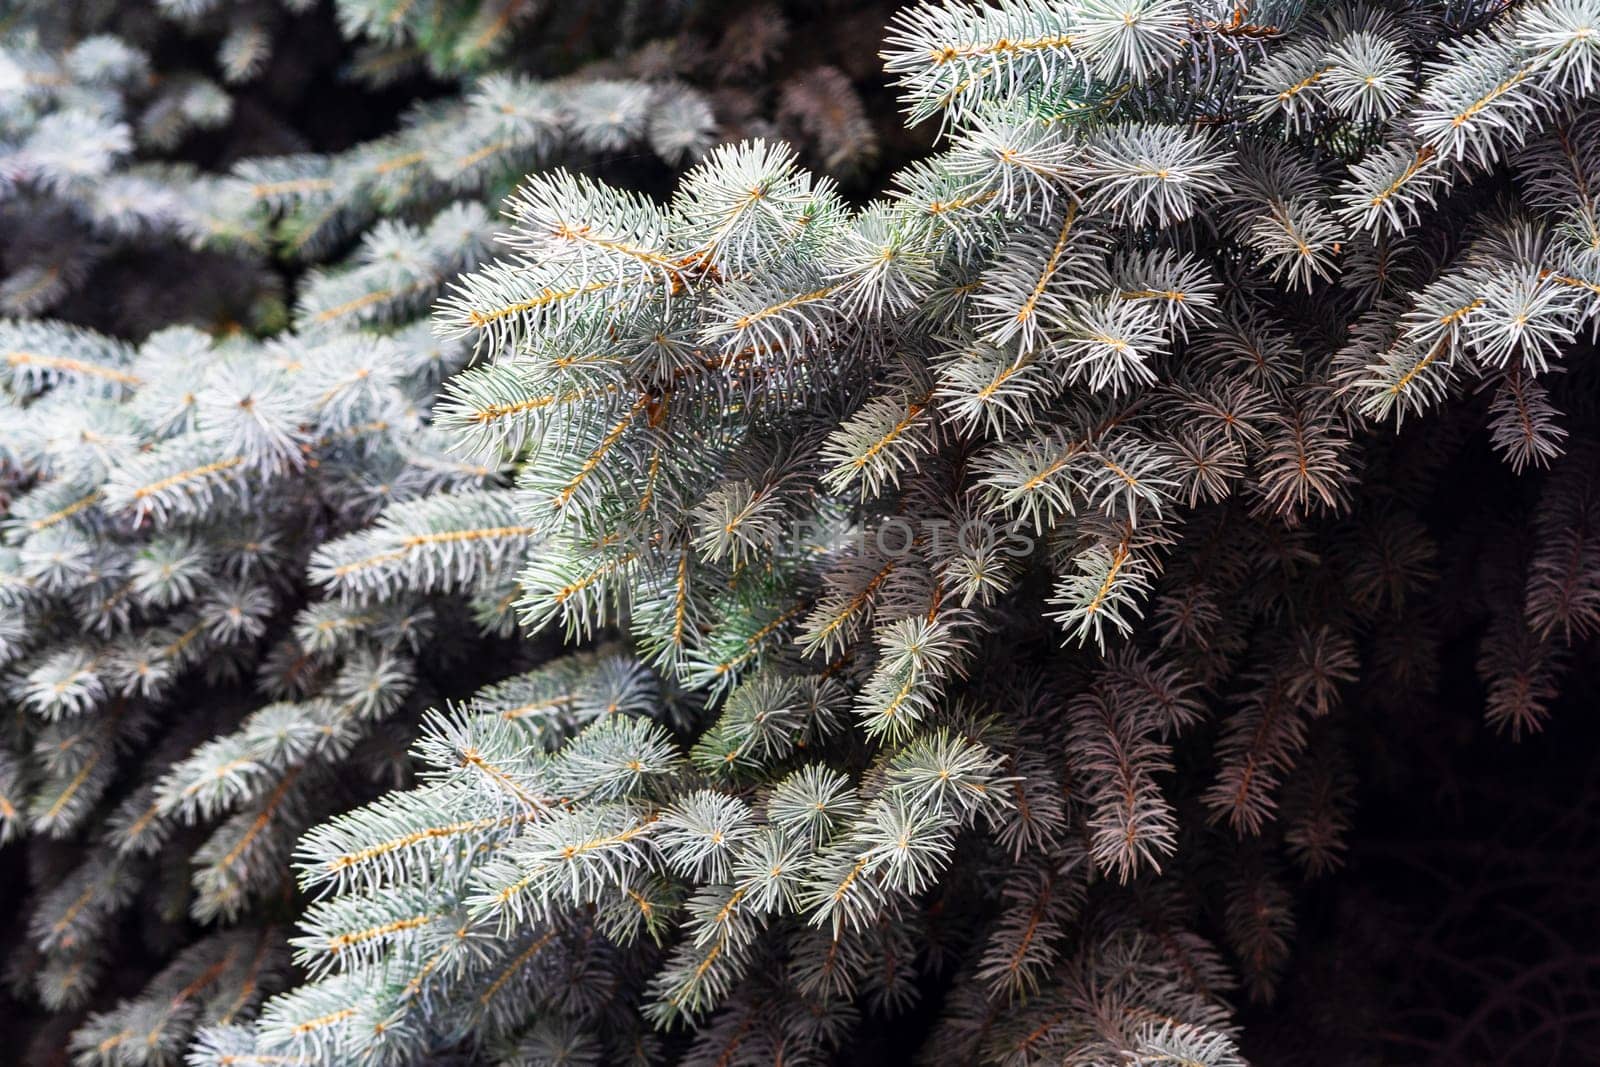 Silver pine tree, silver spruce pine, fir tree brunches closeup photo by vladispas